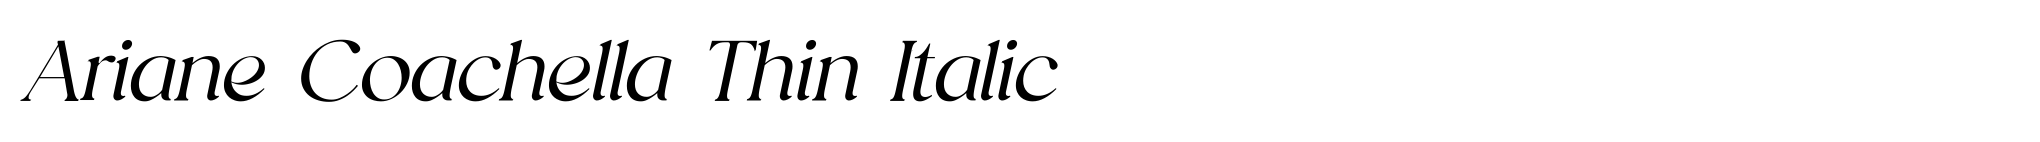 Ariane Coachella Thin Italic image